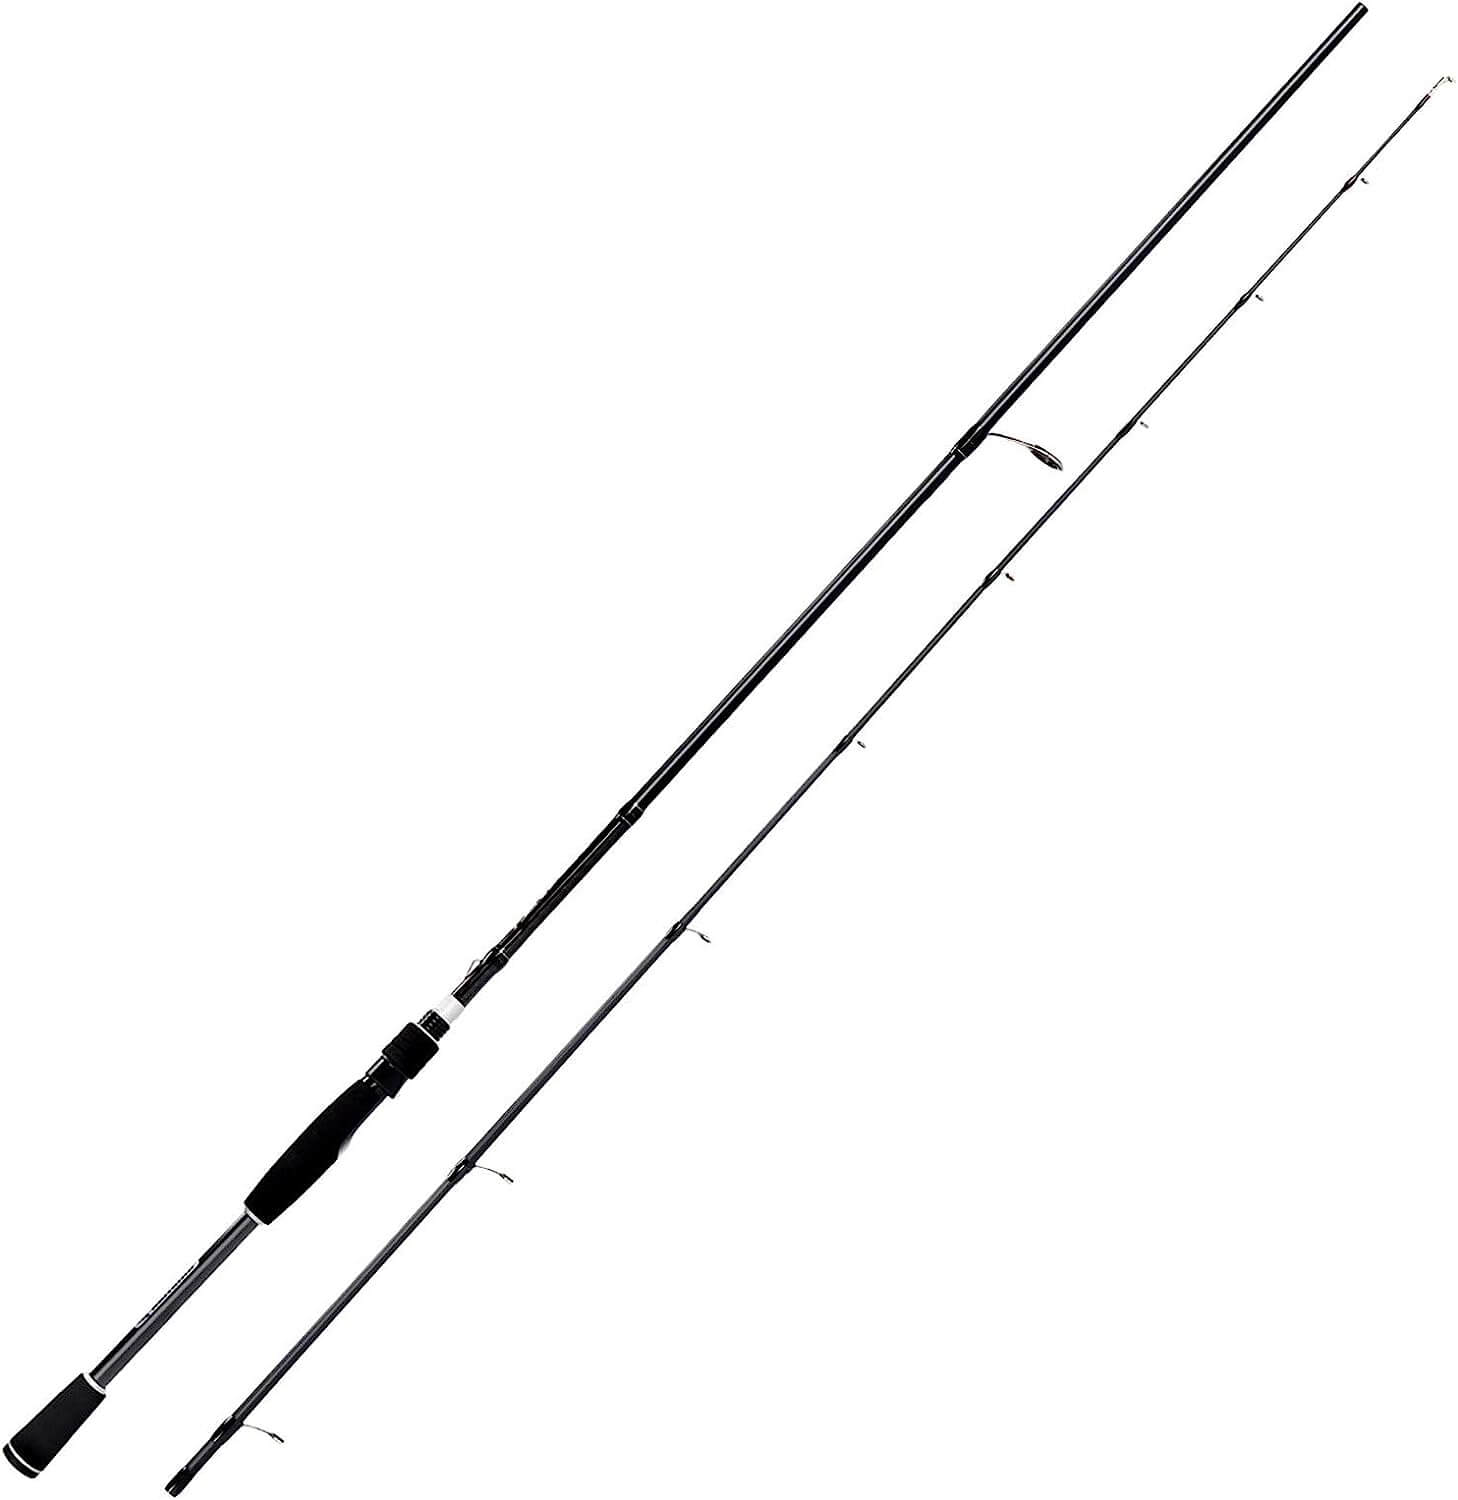 KastKing Perigee II Fishing Rod